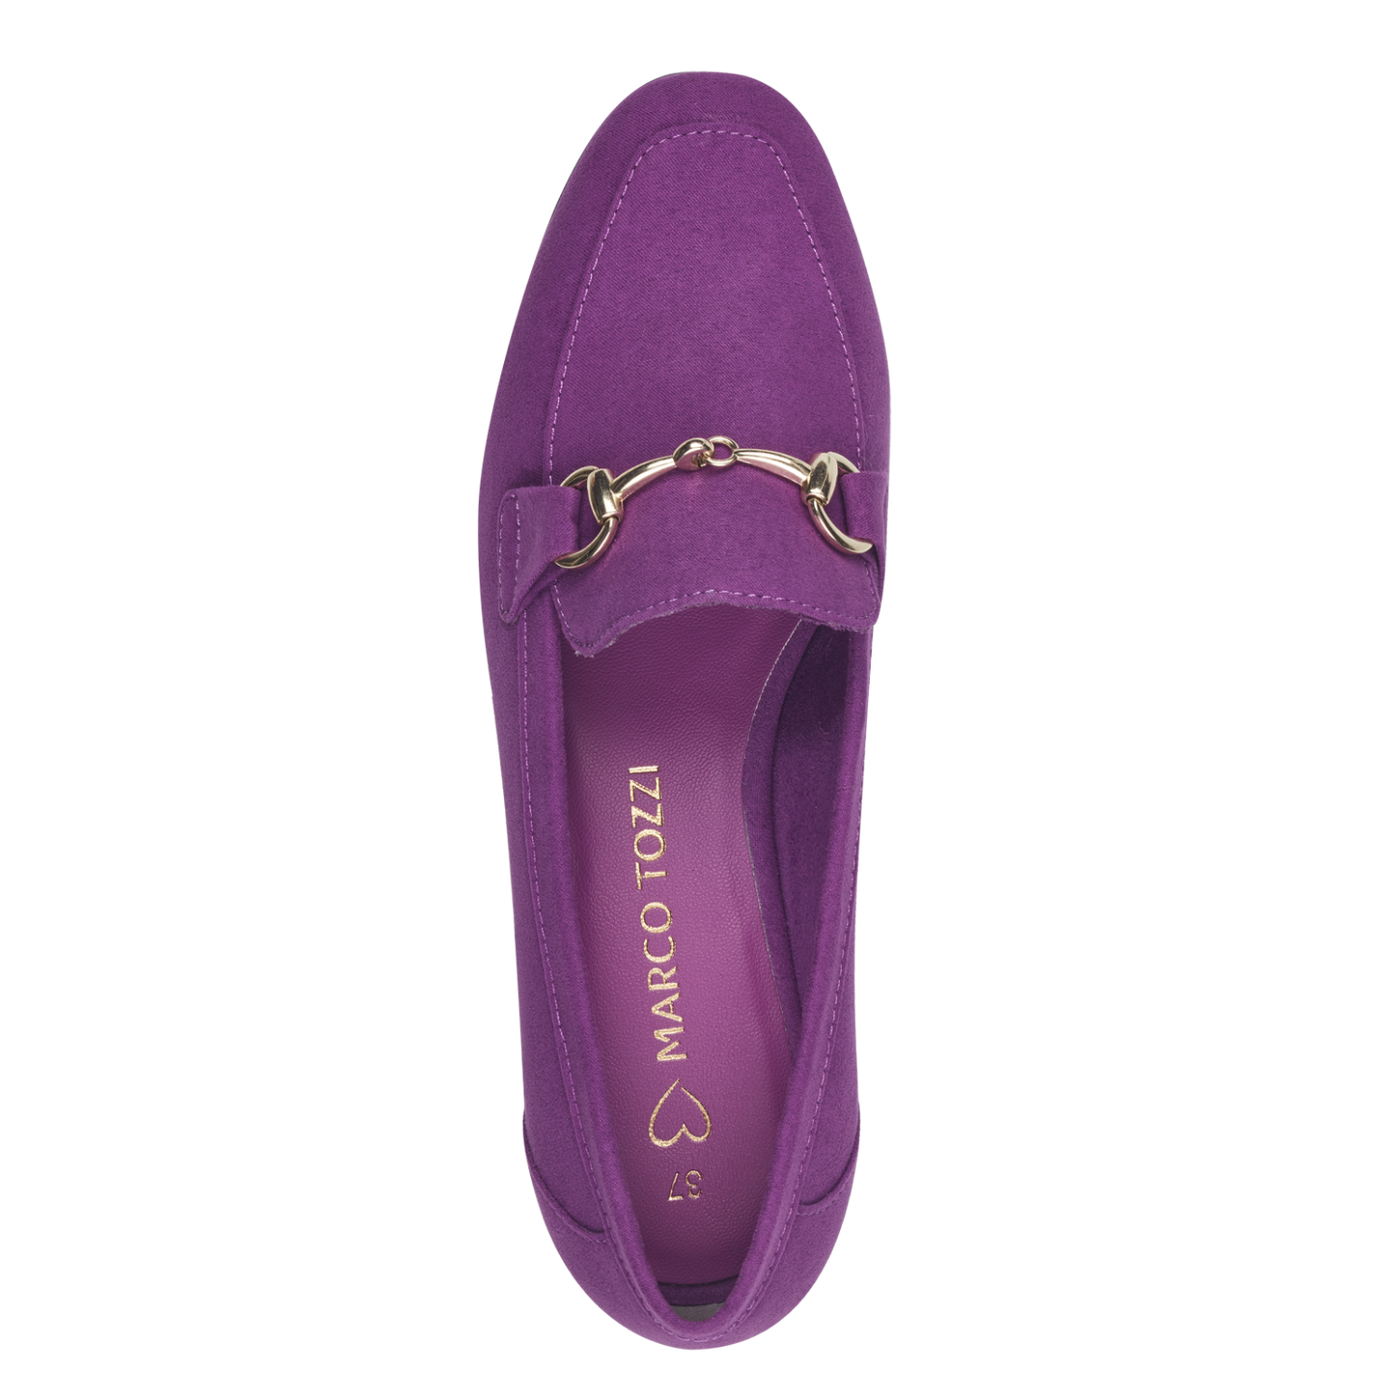 marco tozzi women's violet flat shoes gold buckle